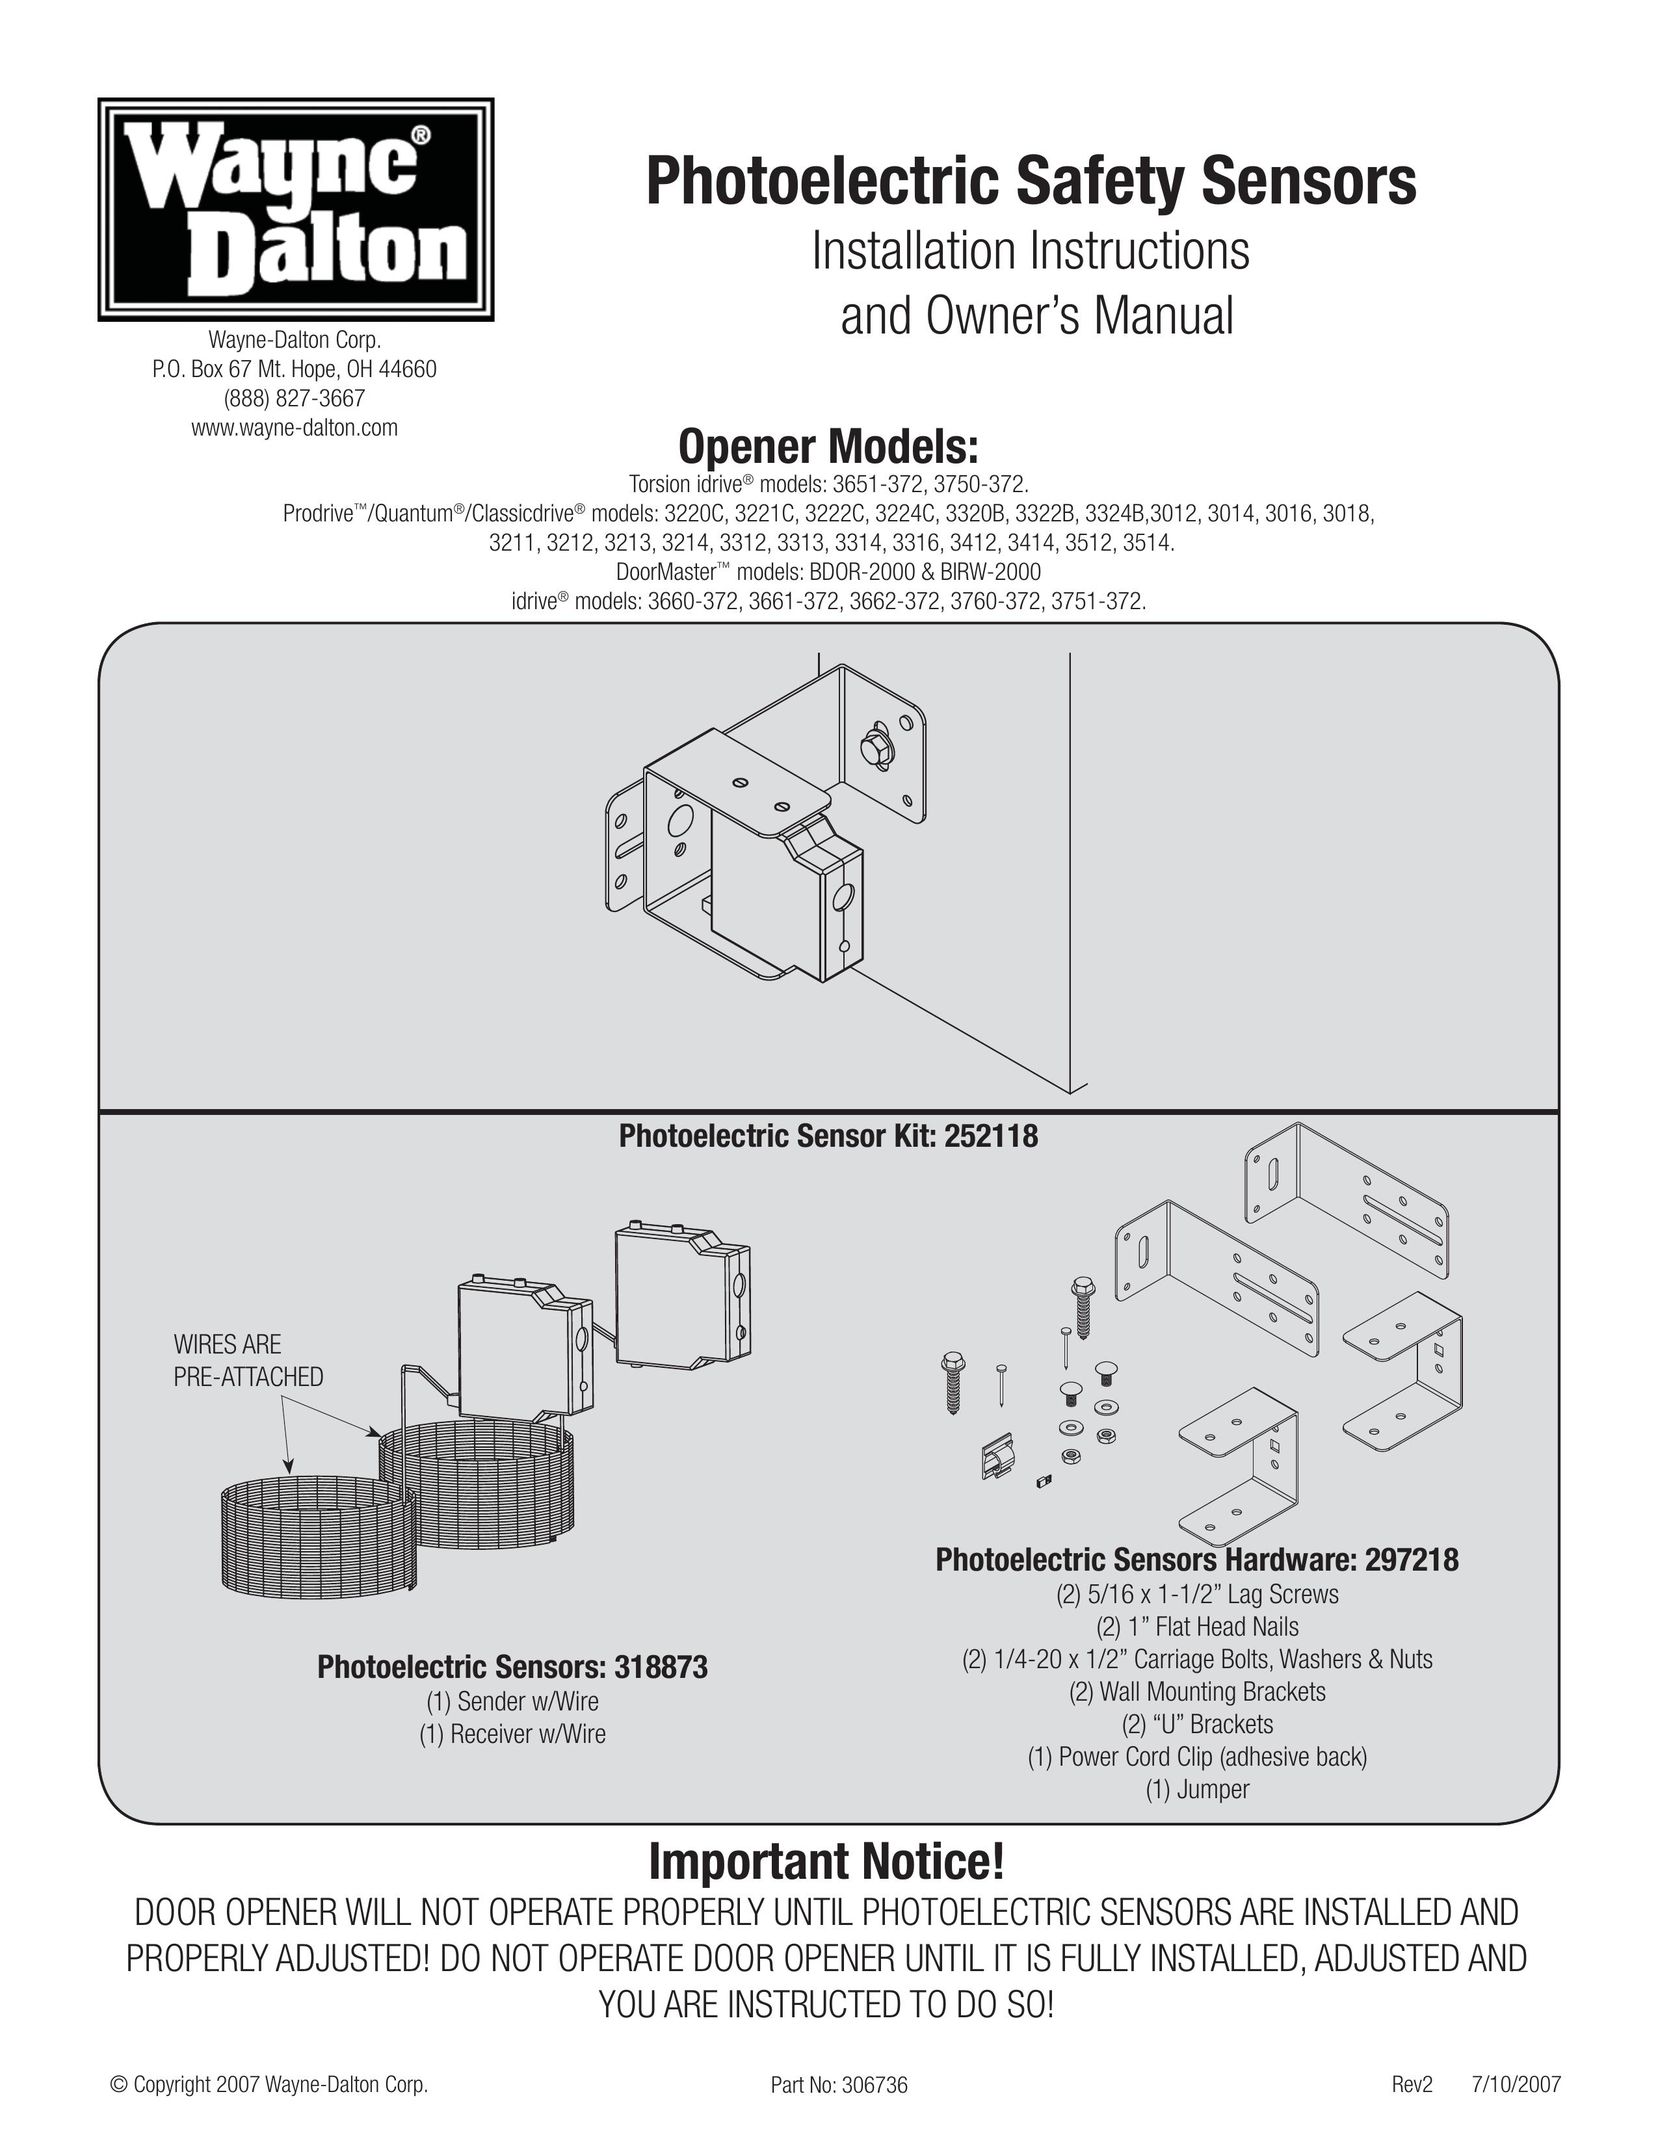 Wayne-Dalton 3750-372 Stud Sensor User Manual